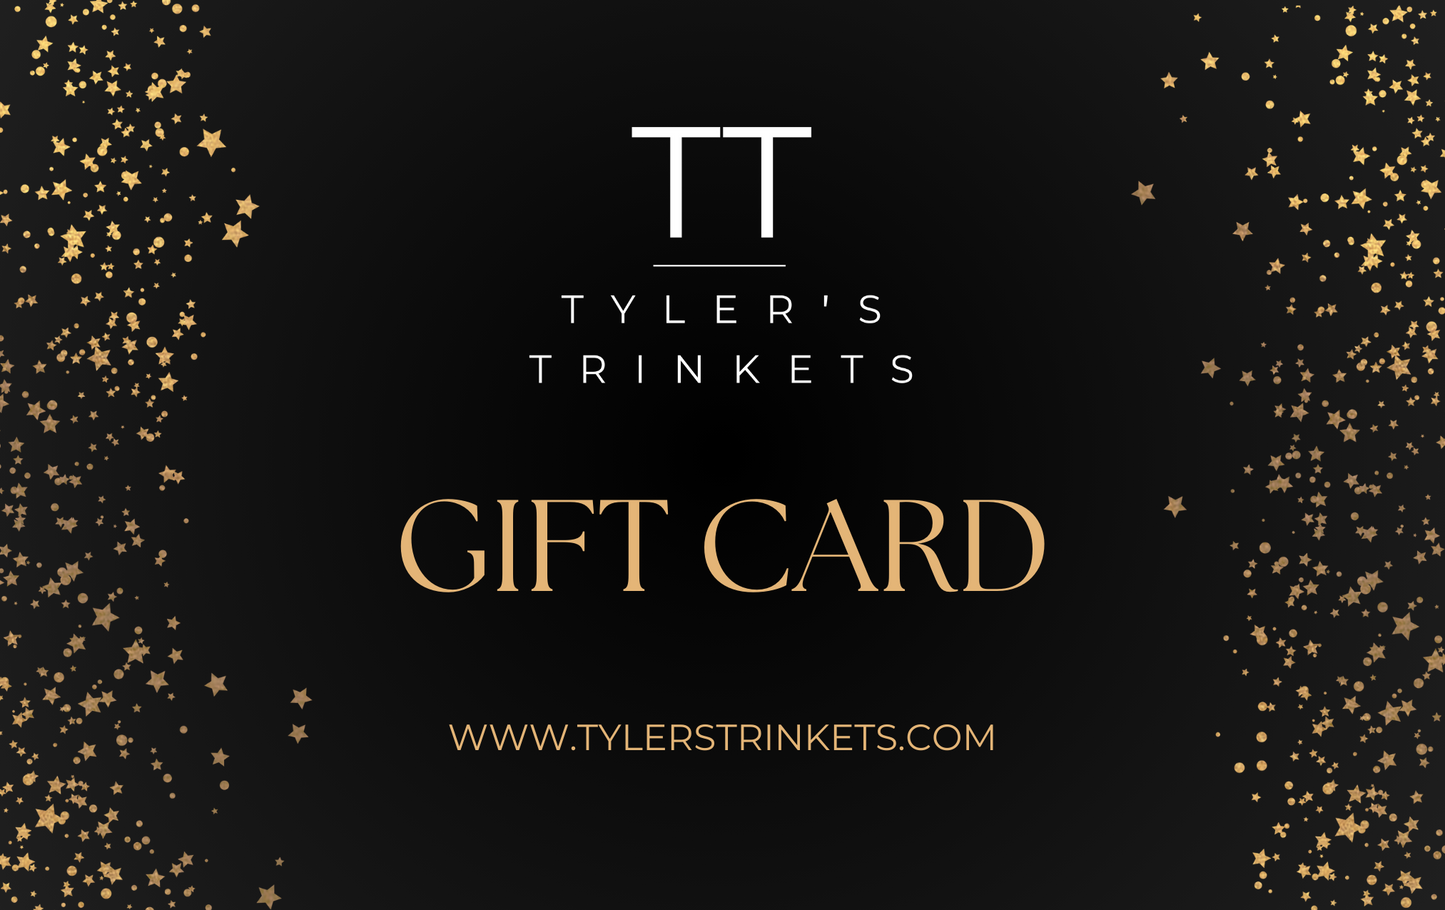 Tyler's Trinkets Gift Card